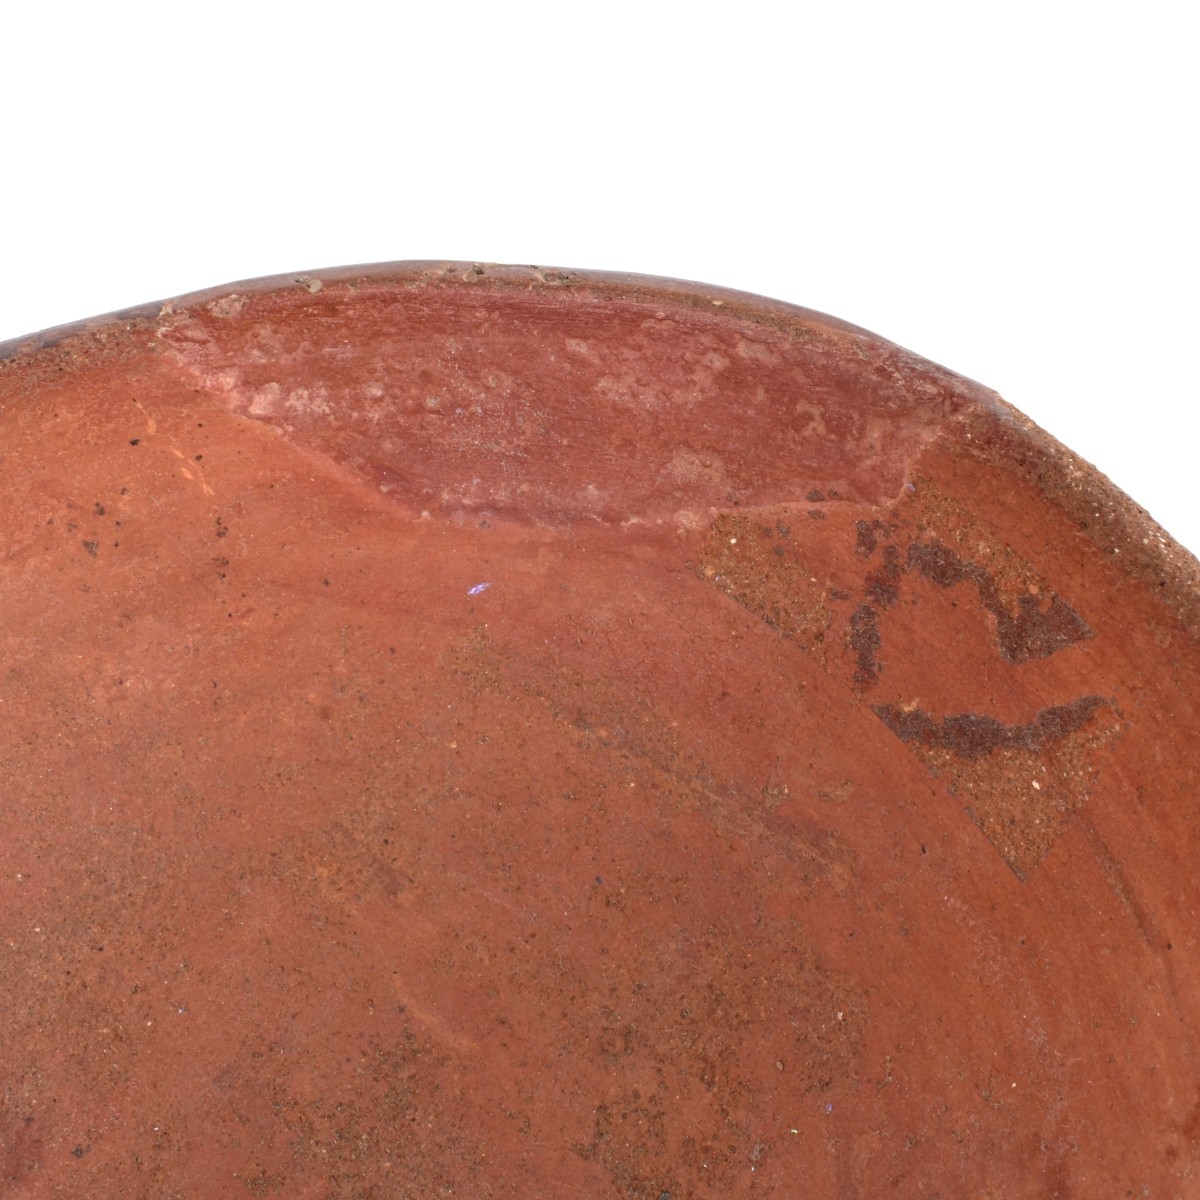 Pre Columbian Bowl